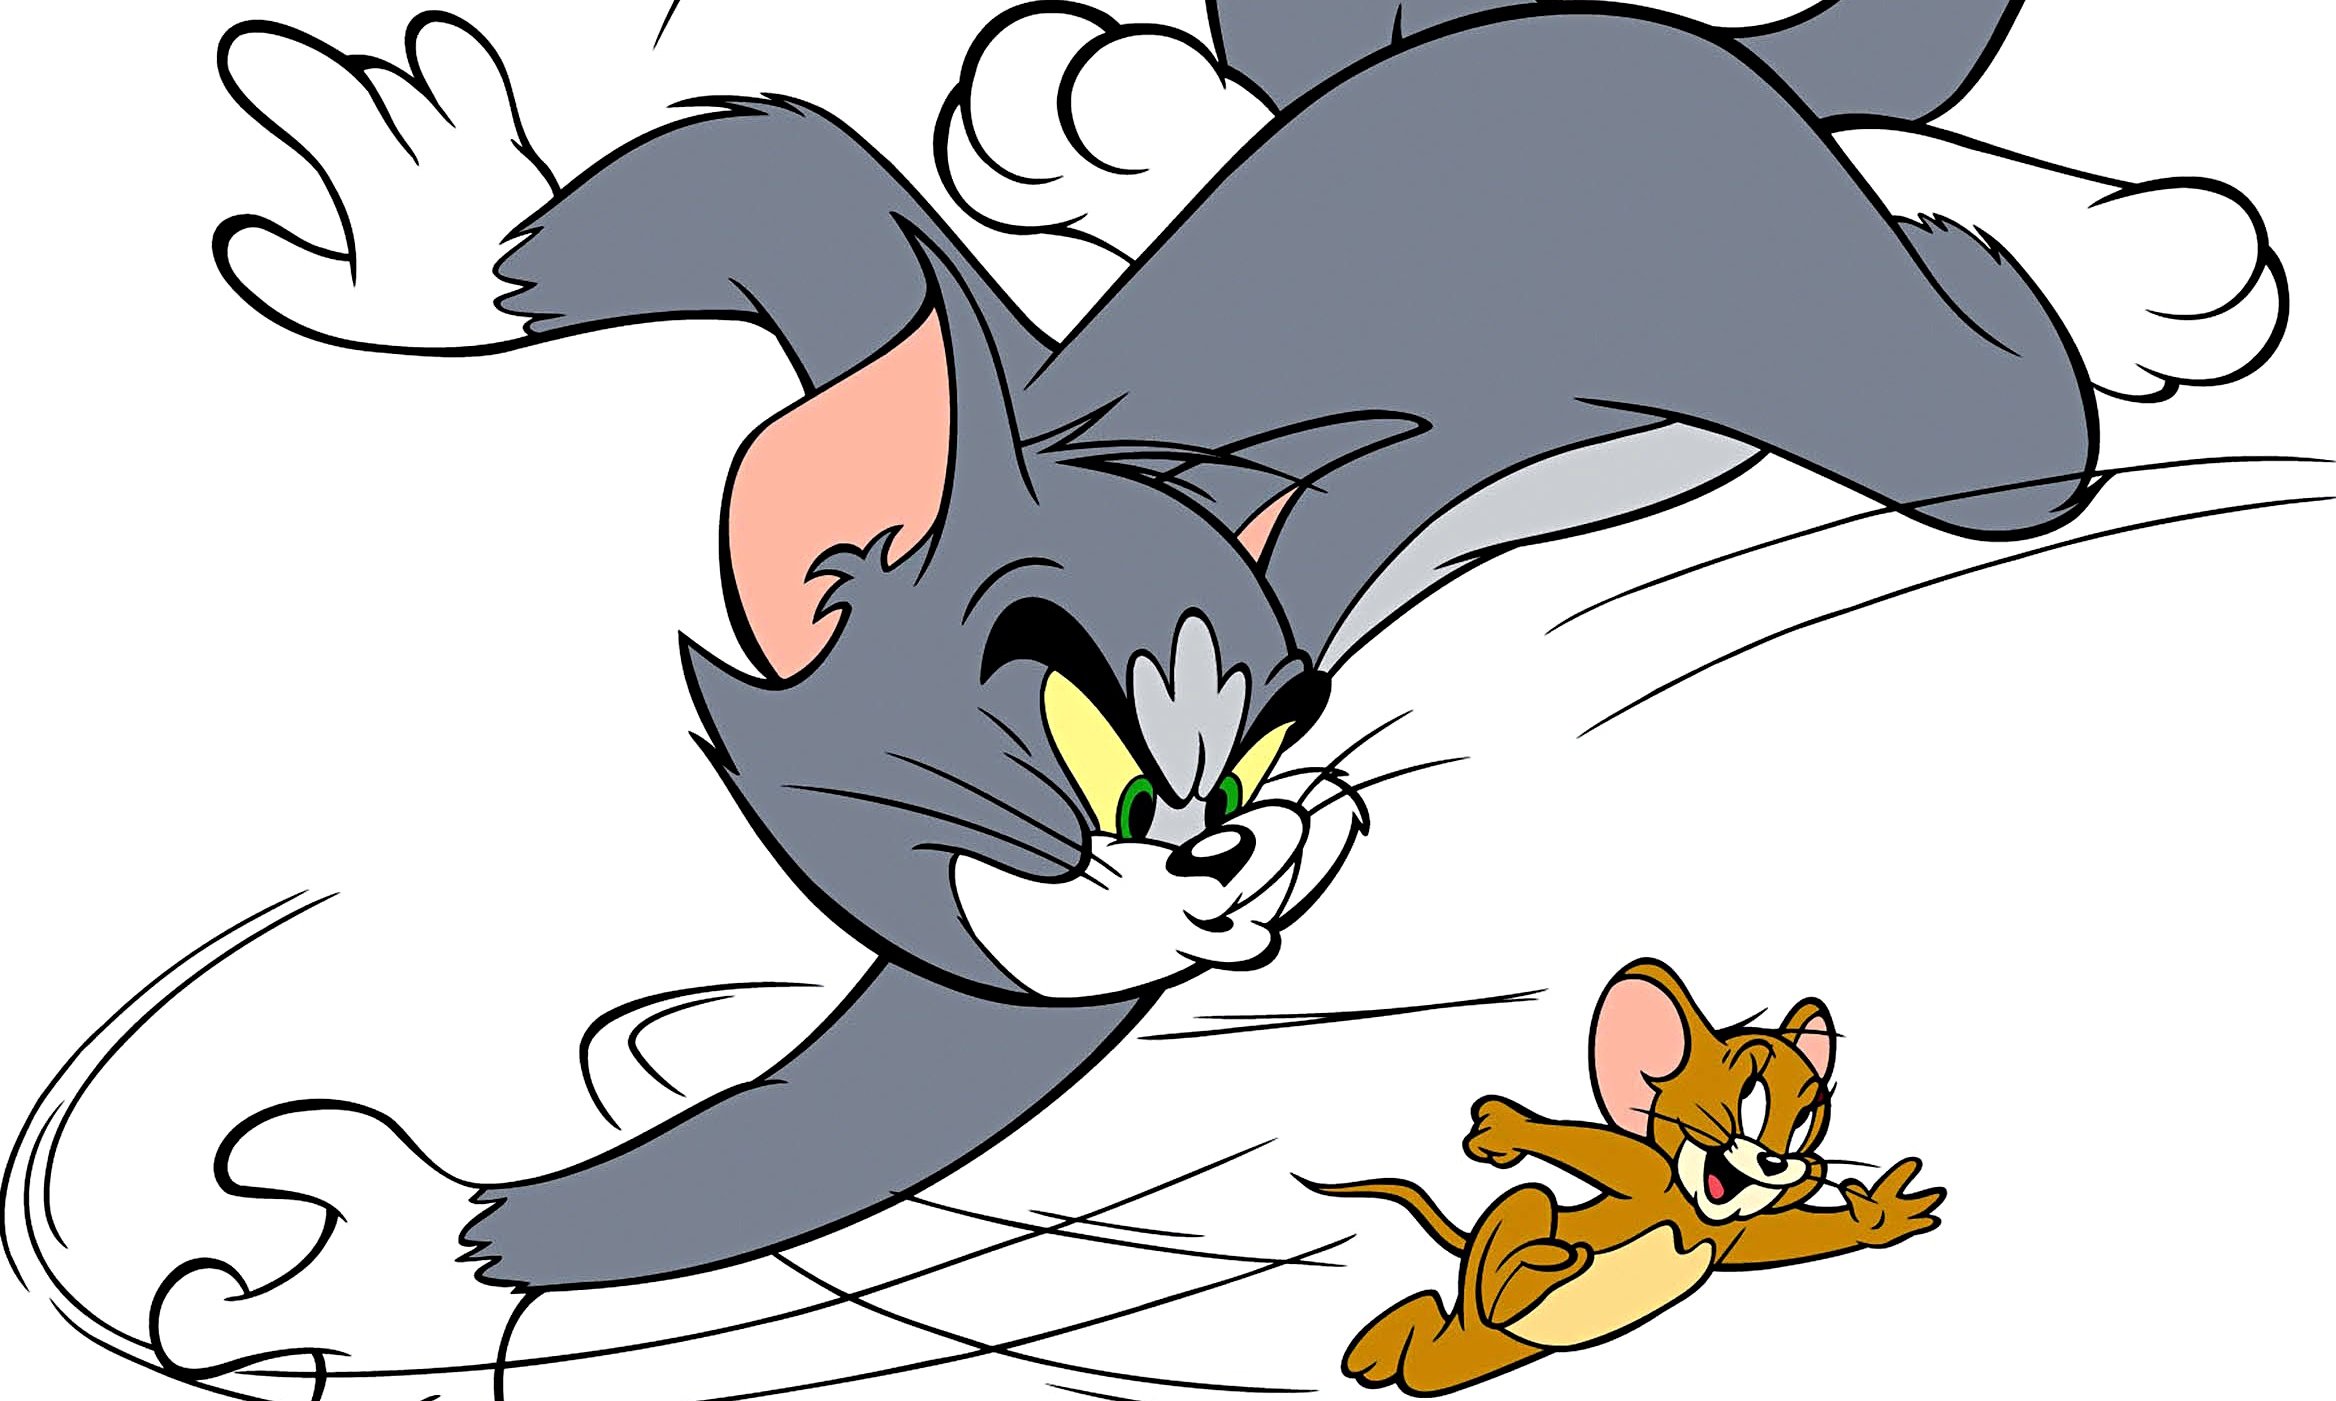 TOM JERRY animation cartoon comedy family cat mouse mice